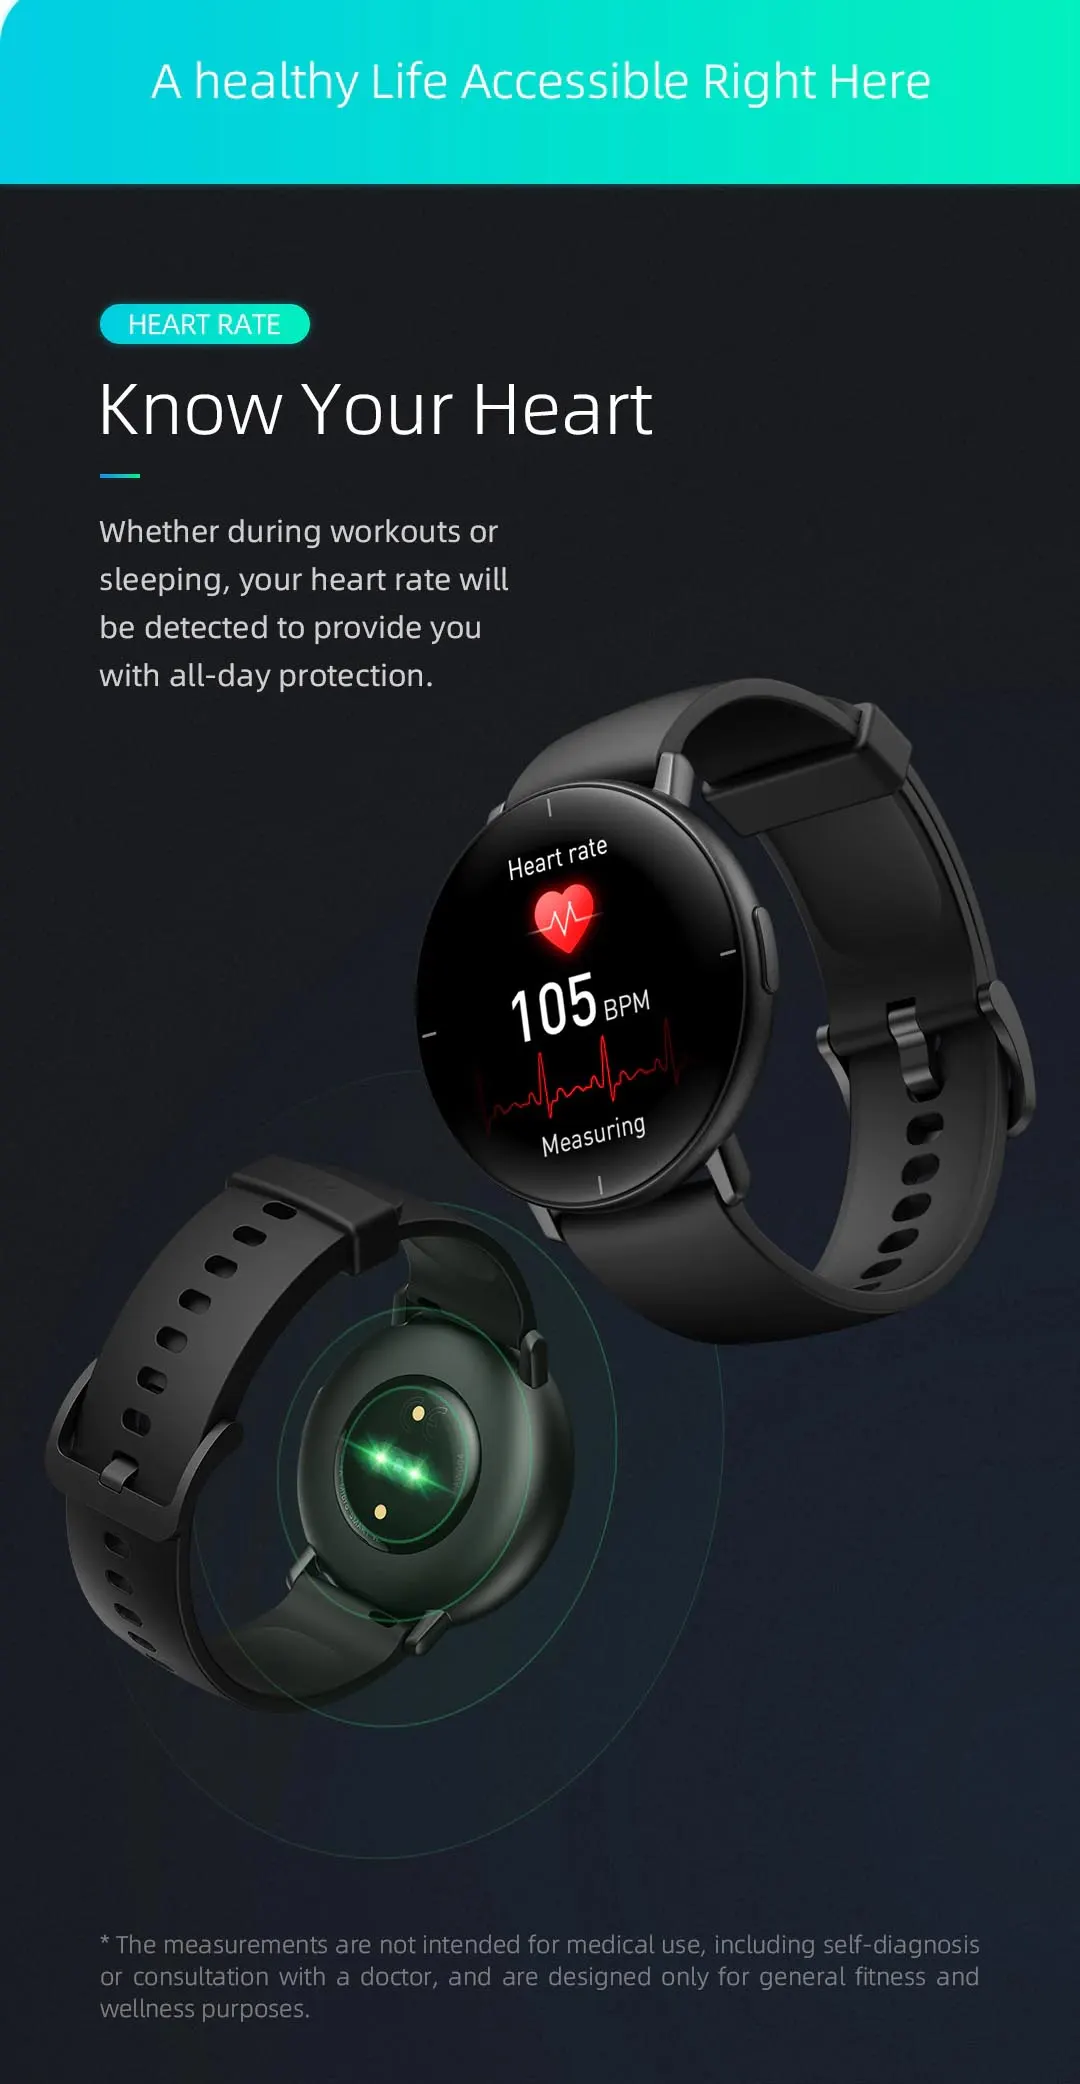 ساعت هوشمند میبرو Mibro Lite Smart Watch